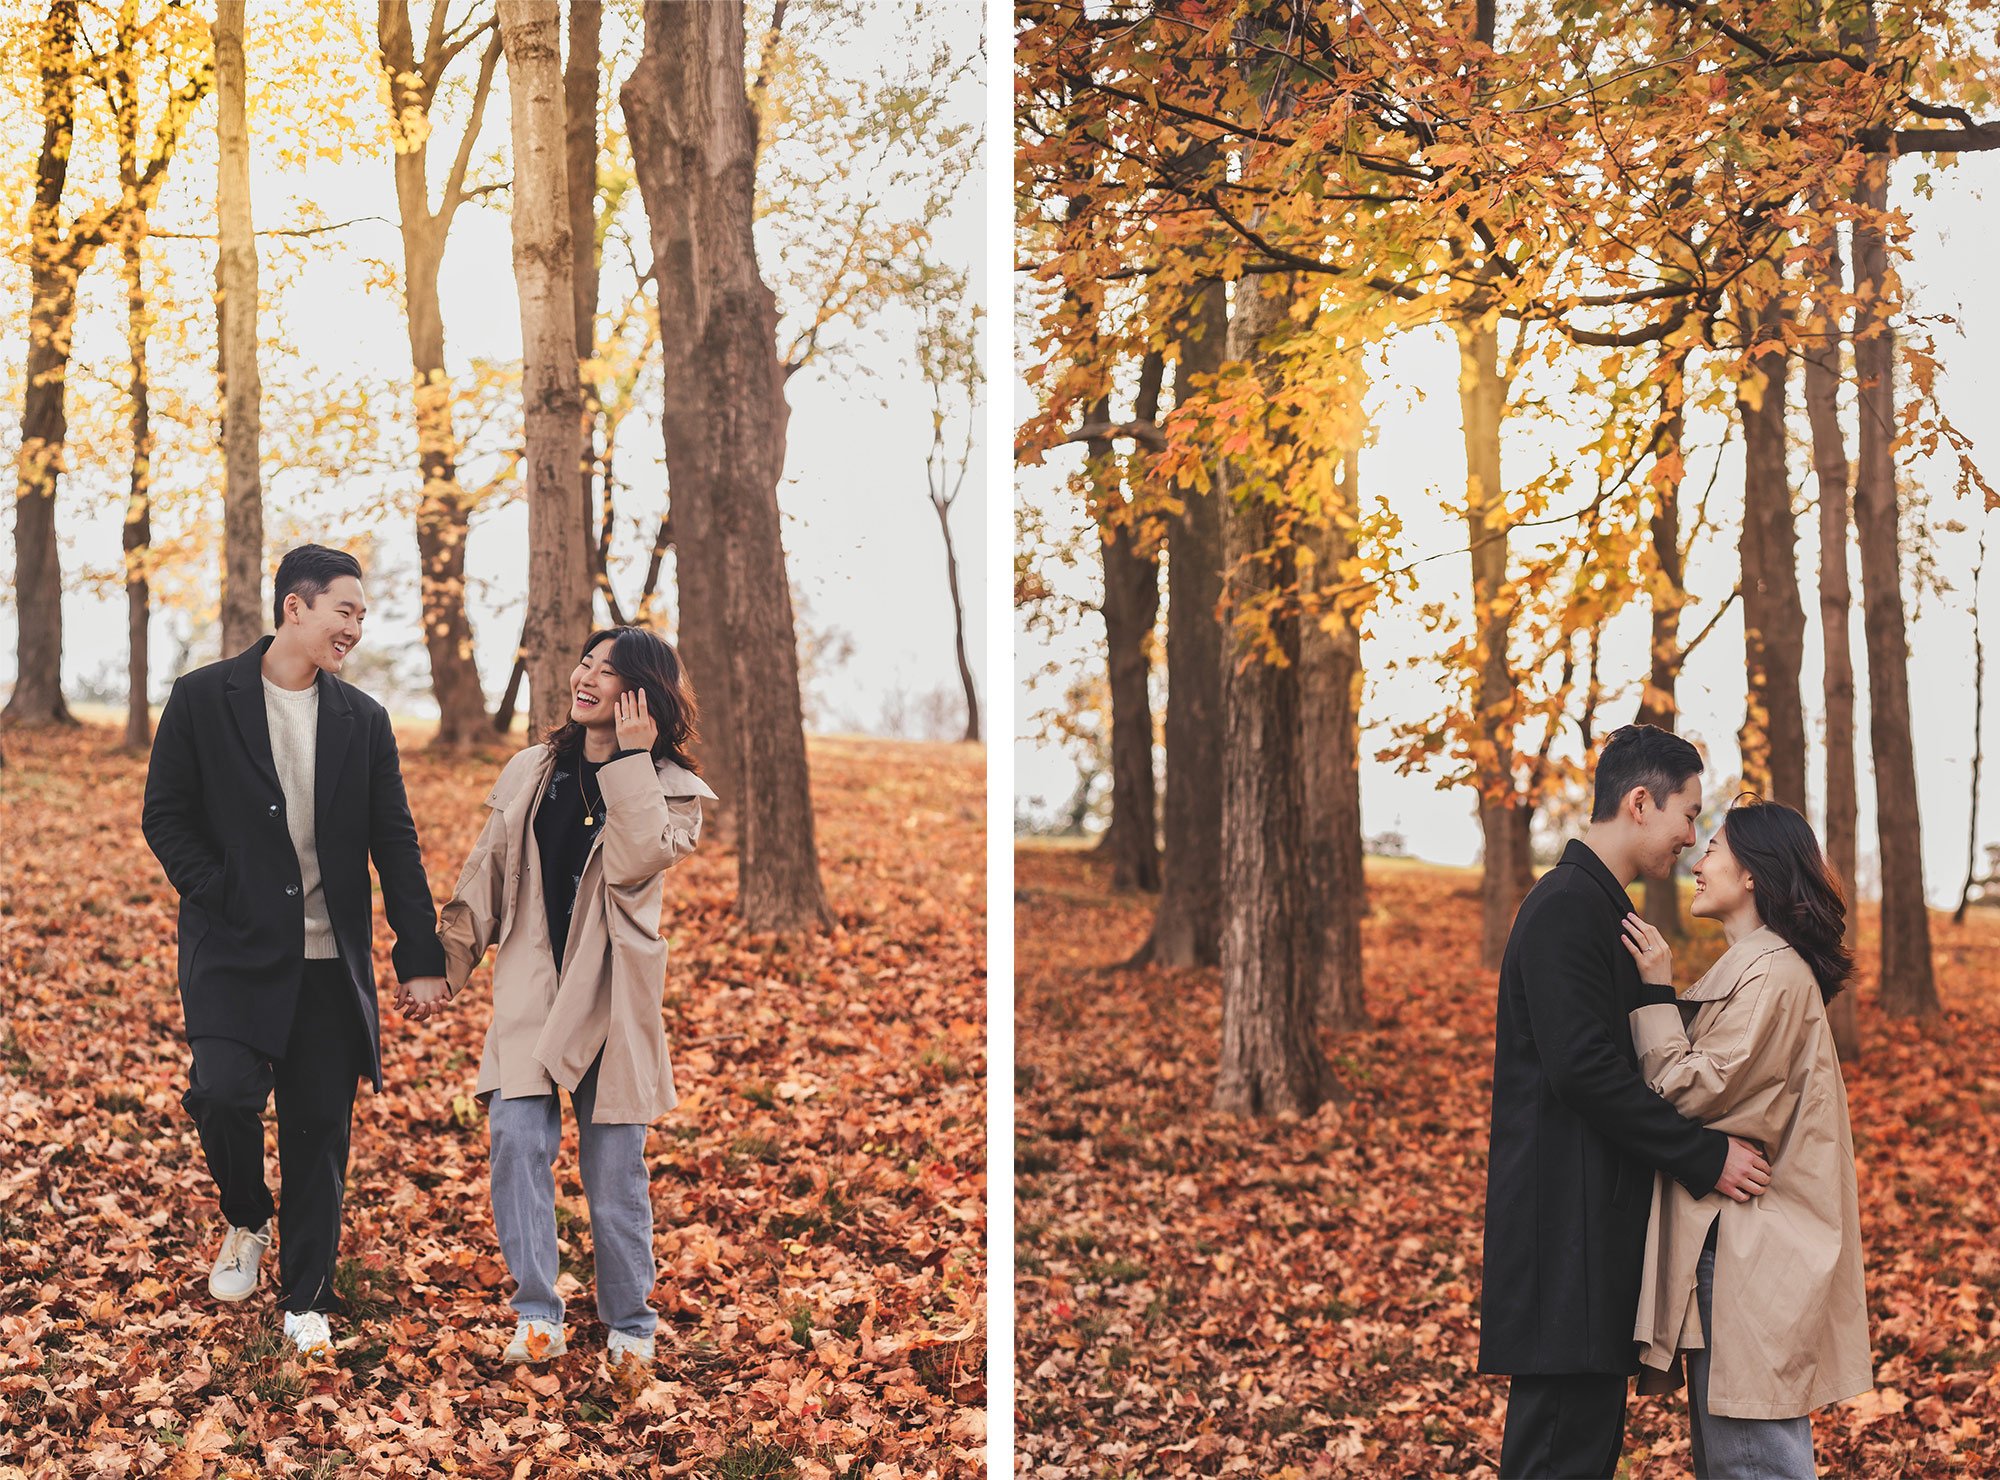 Boston Wedding Proposal Photographer | Stephen Grant Photography